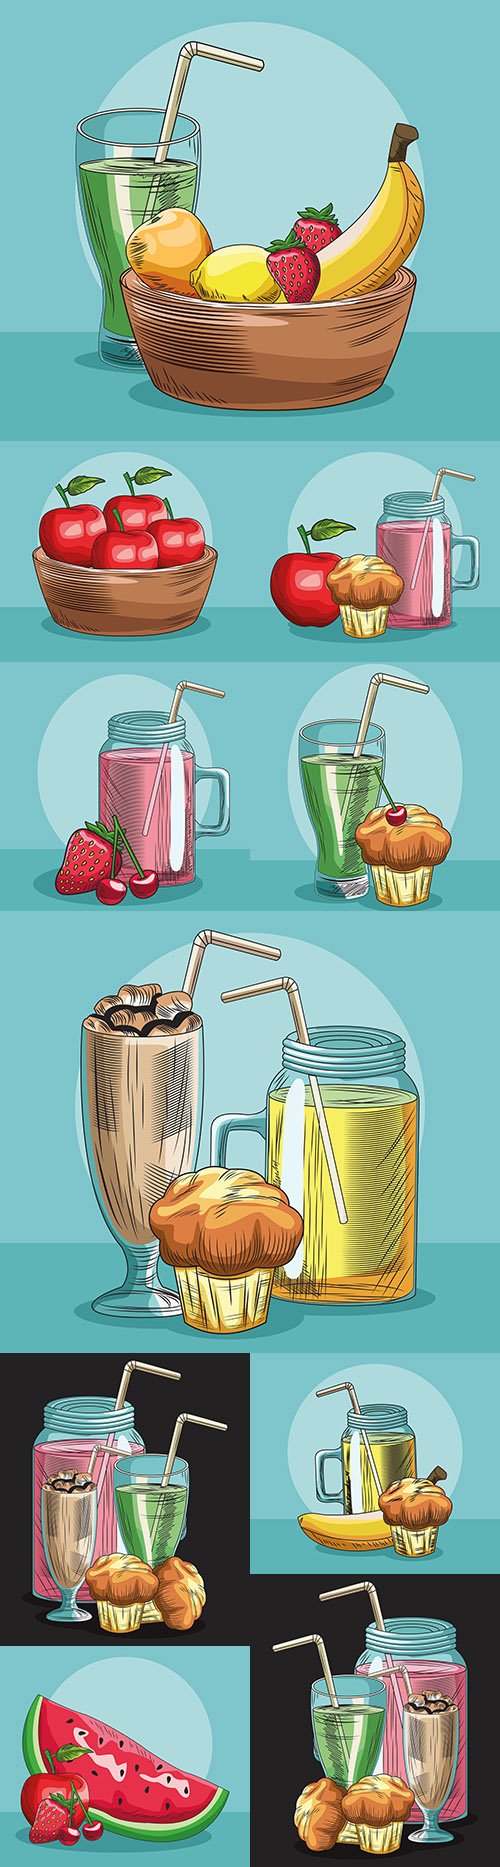 Milkshake, cupcake and fresh fruit painted illustrations